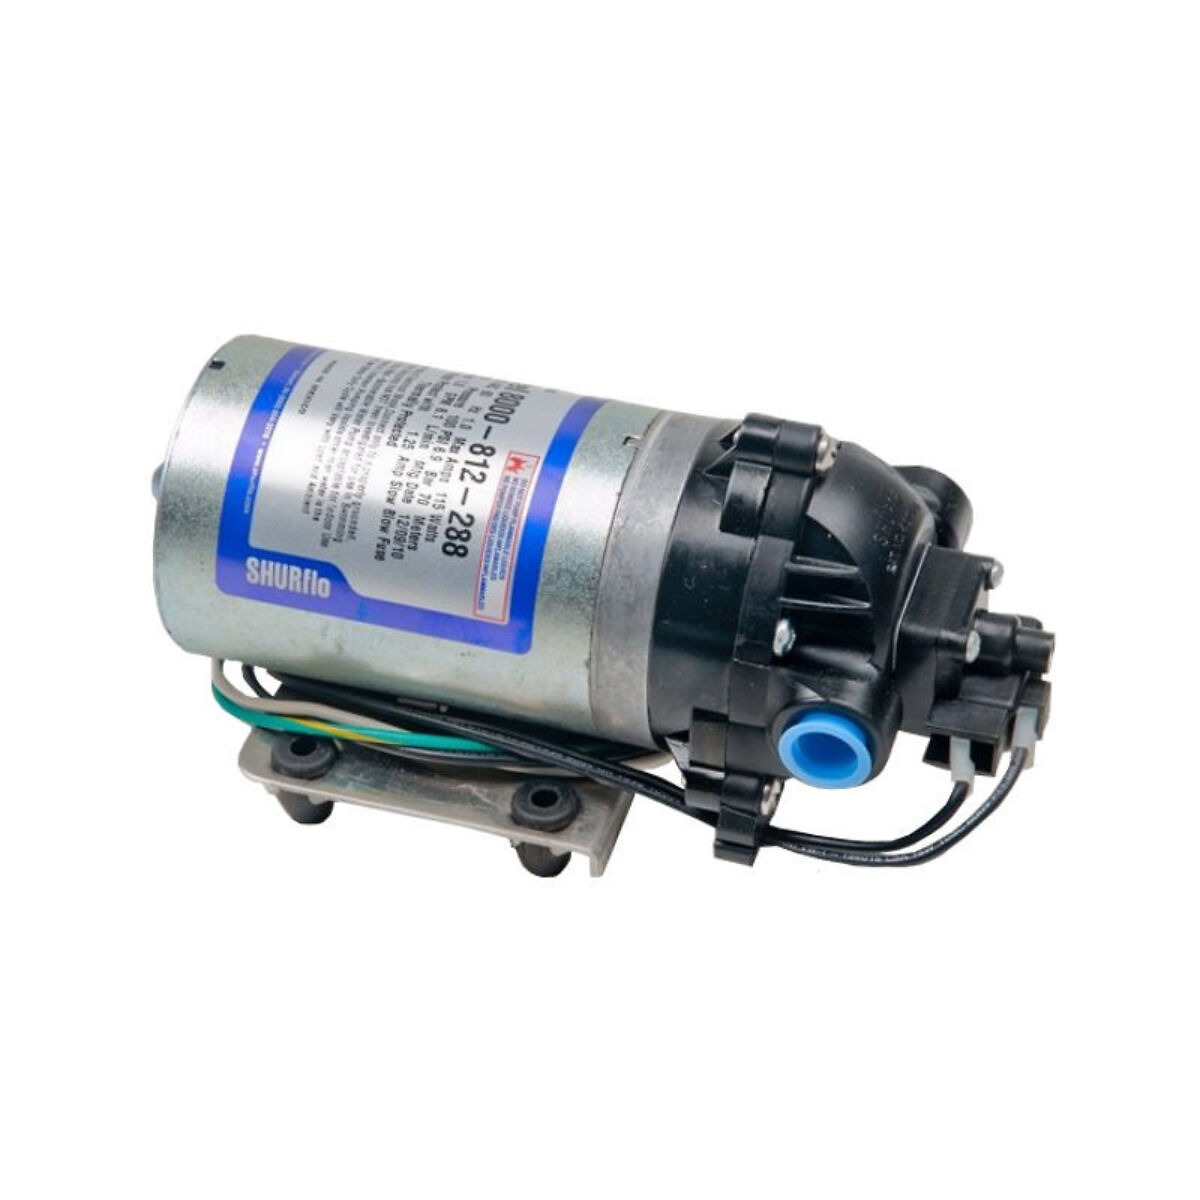 Shurflo 1.3 GPM High Pressure Demand Pump W/Bypass 115V8000-812-288 